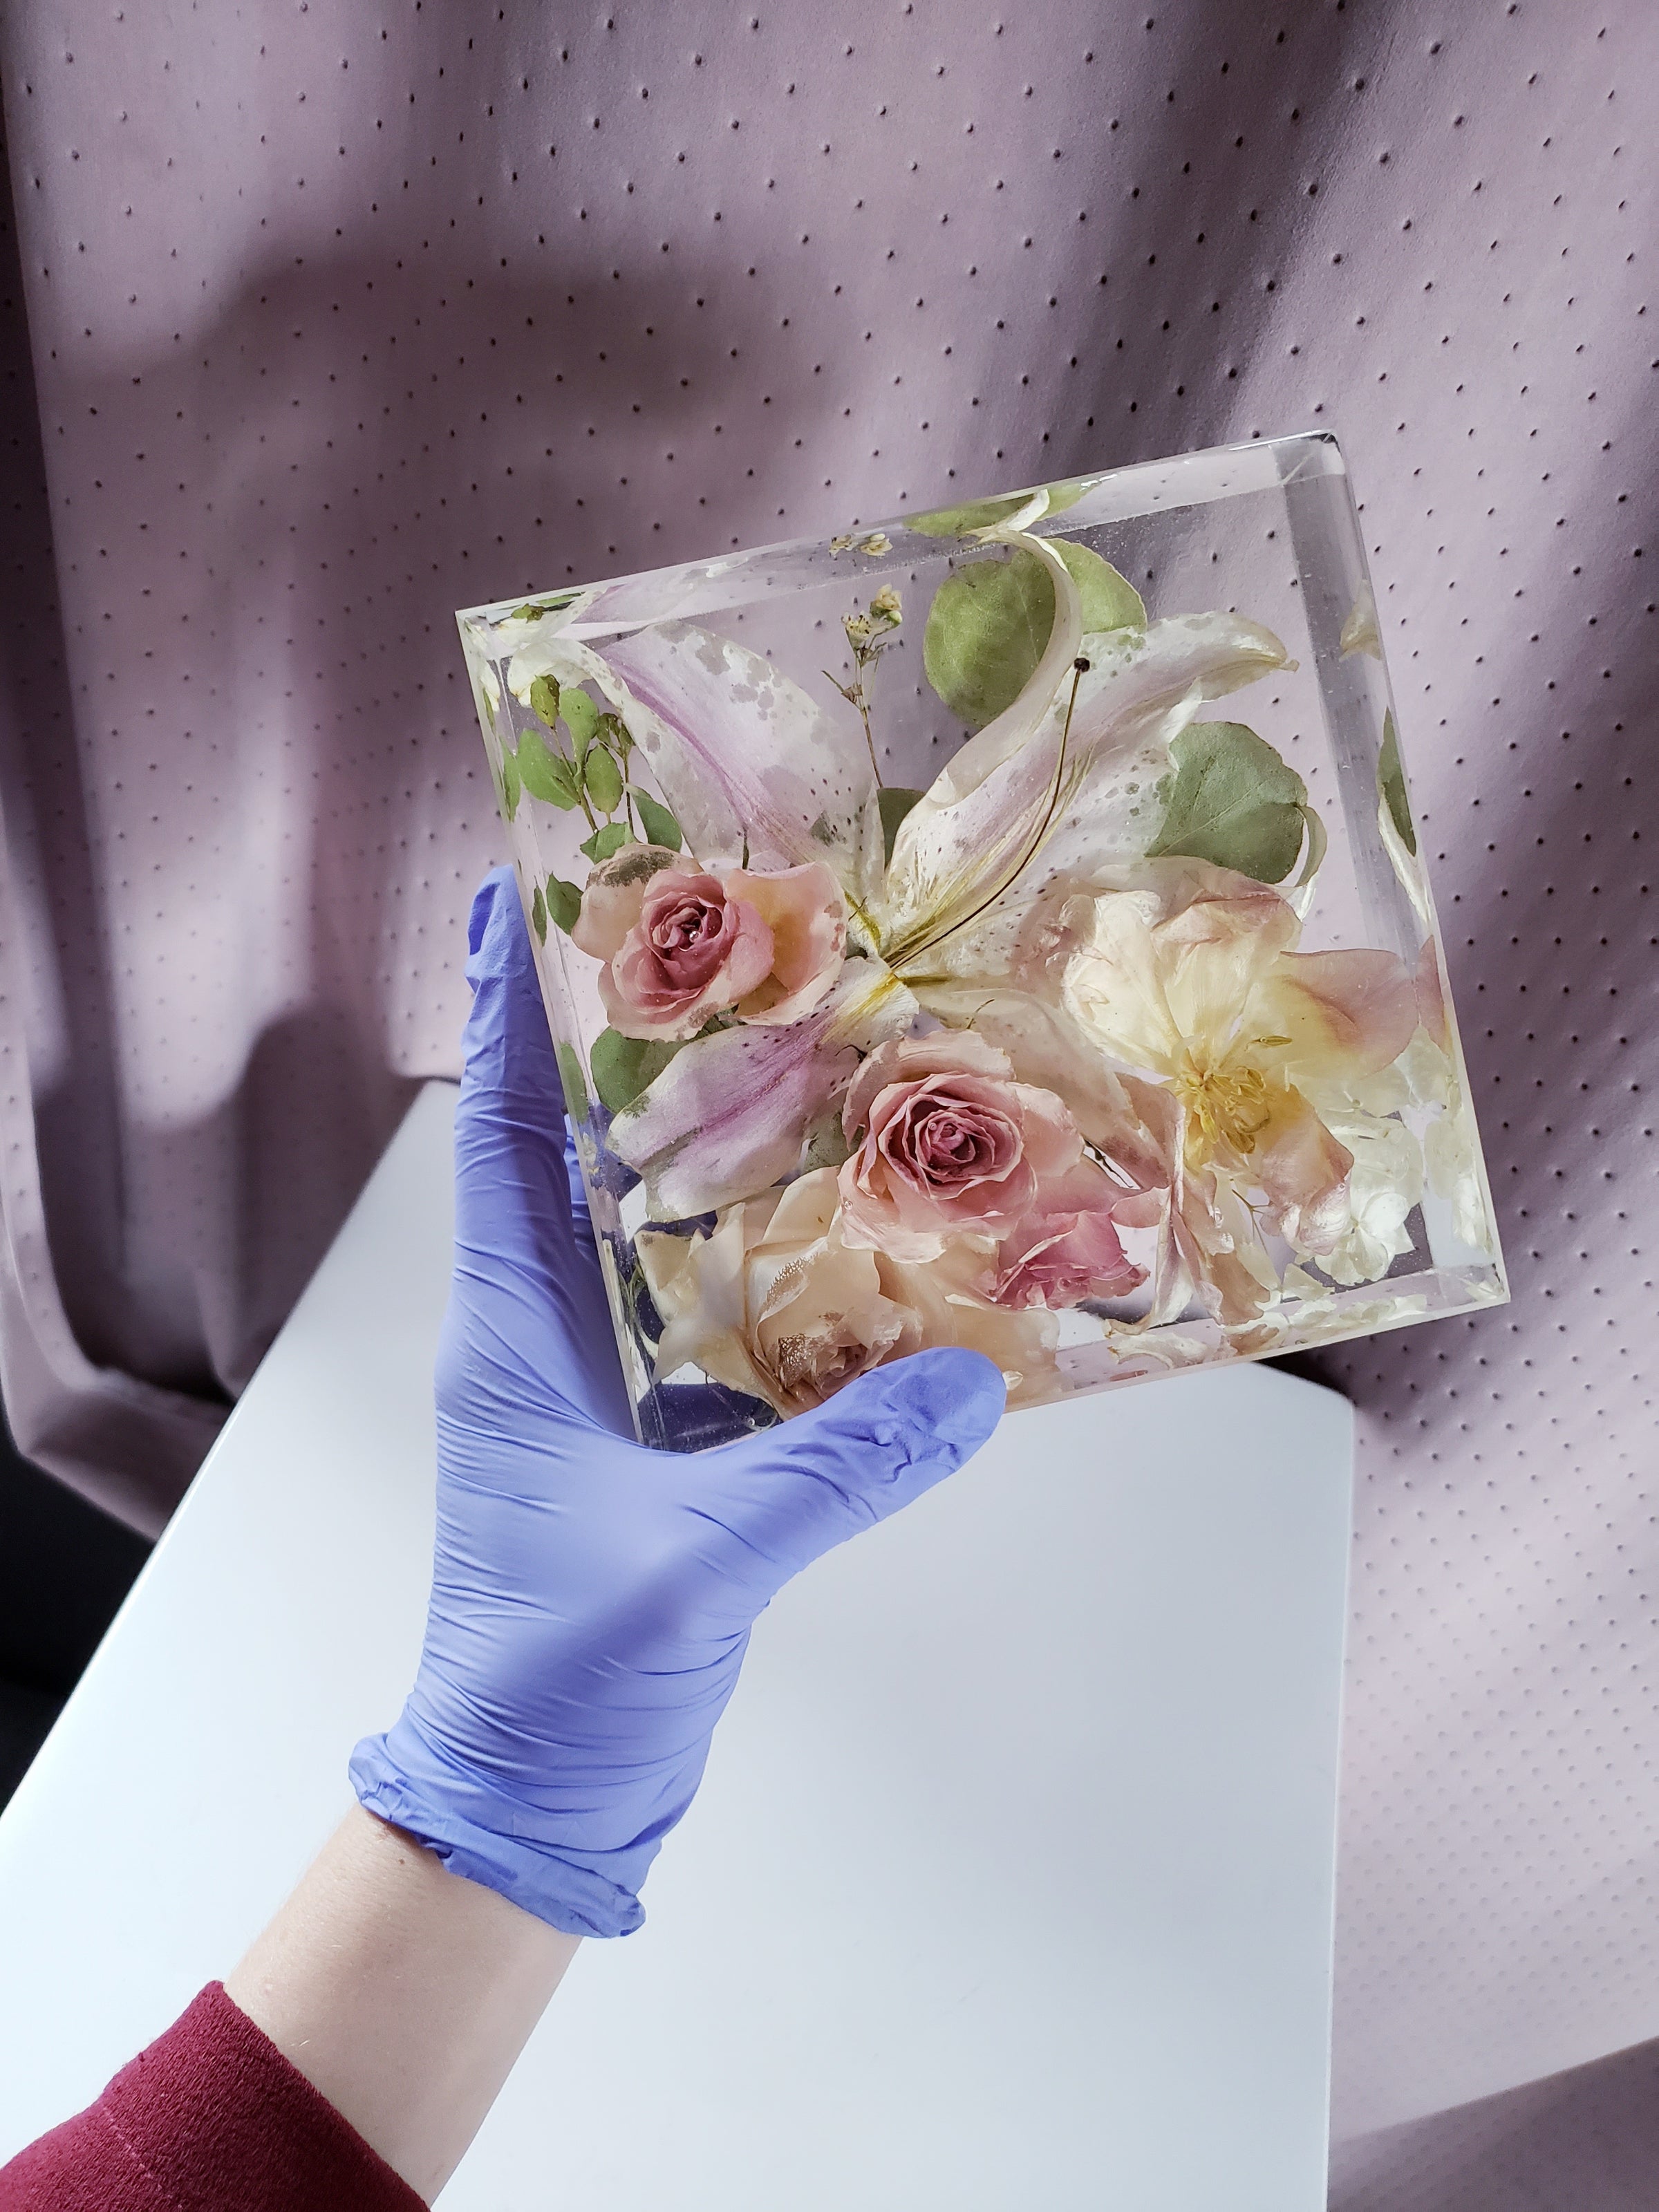 Bouquet preservation – Mertle & Dot